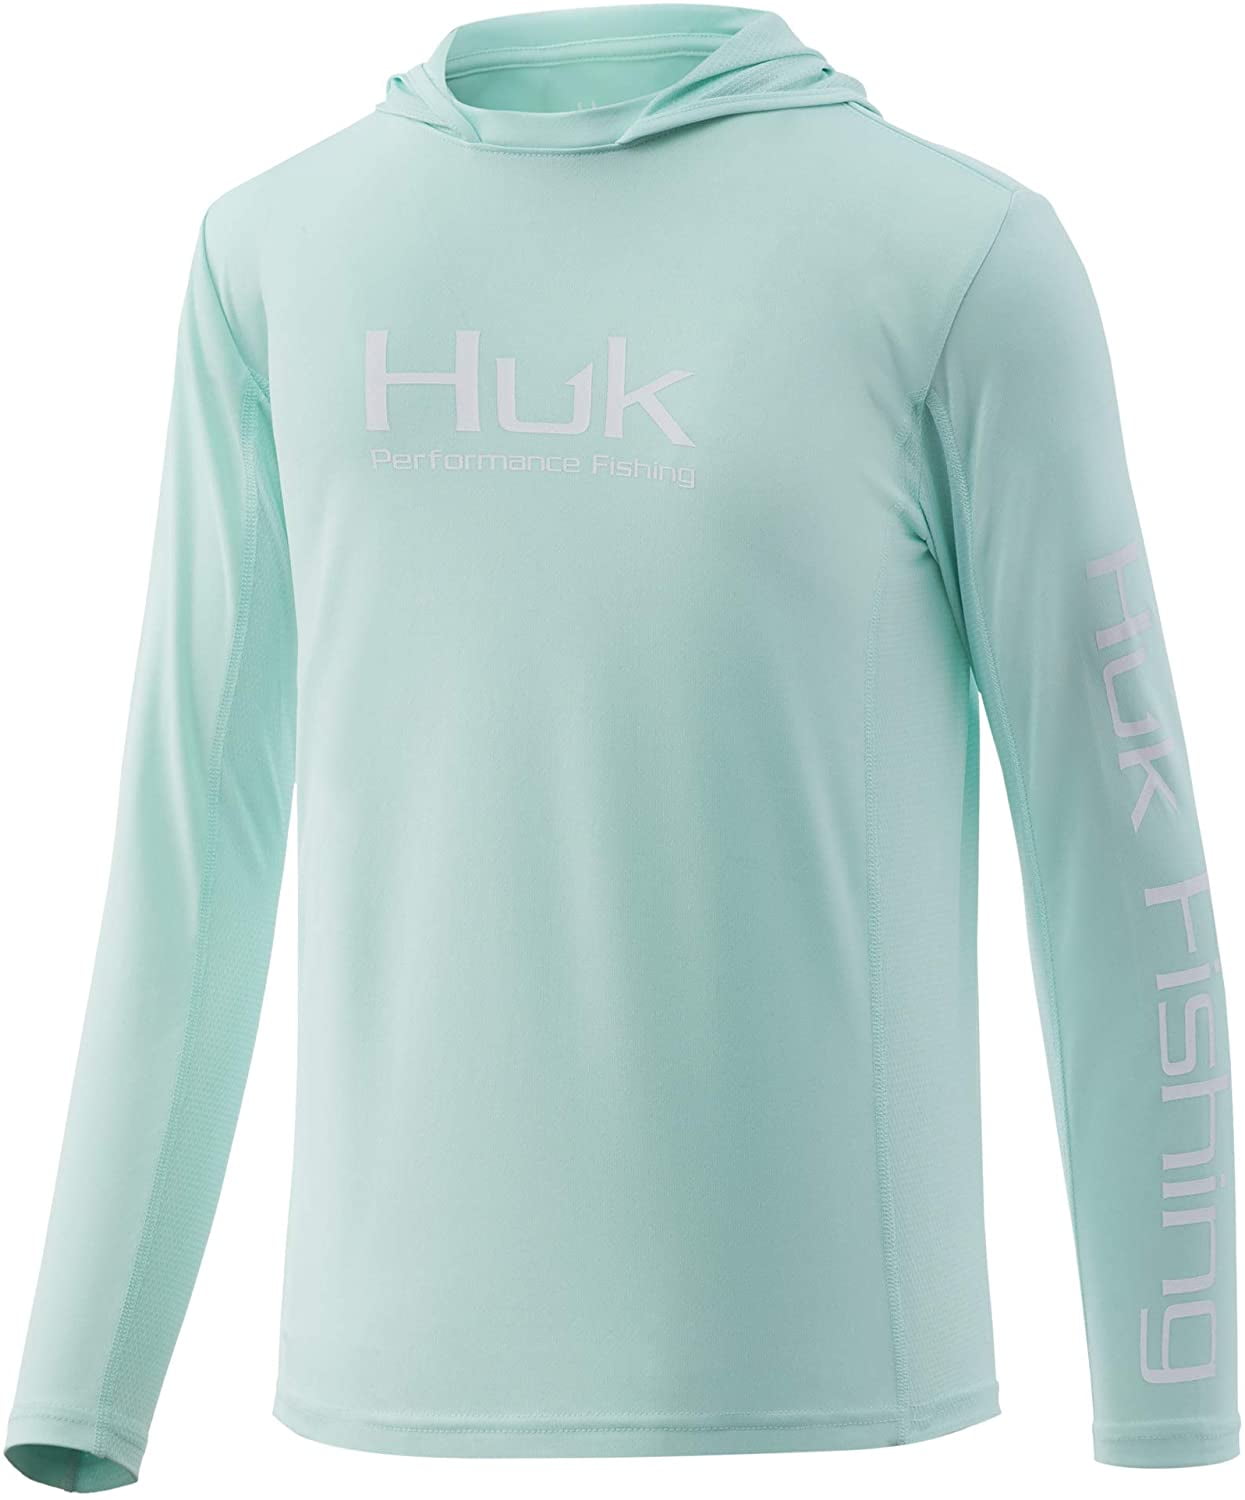 Huk Youth Icon X Seafoam Medium Long Sleeve Hoodie Fishing Shirt 